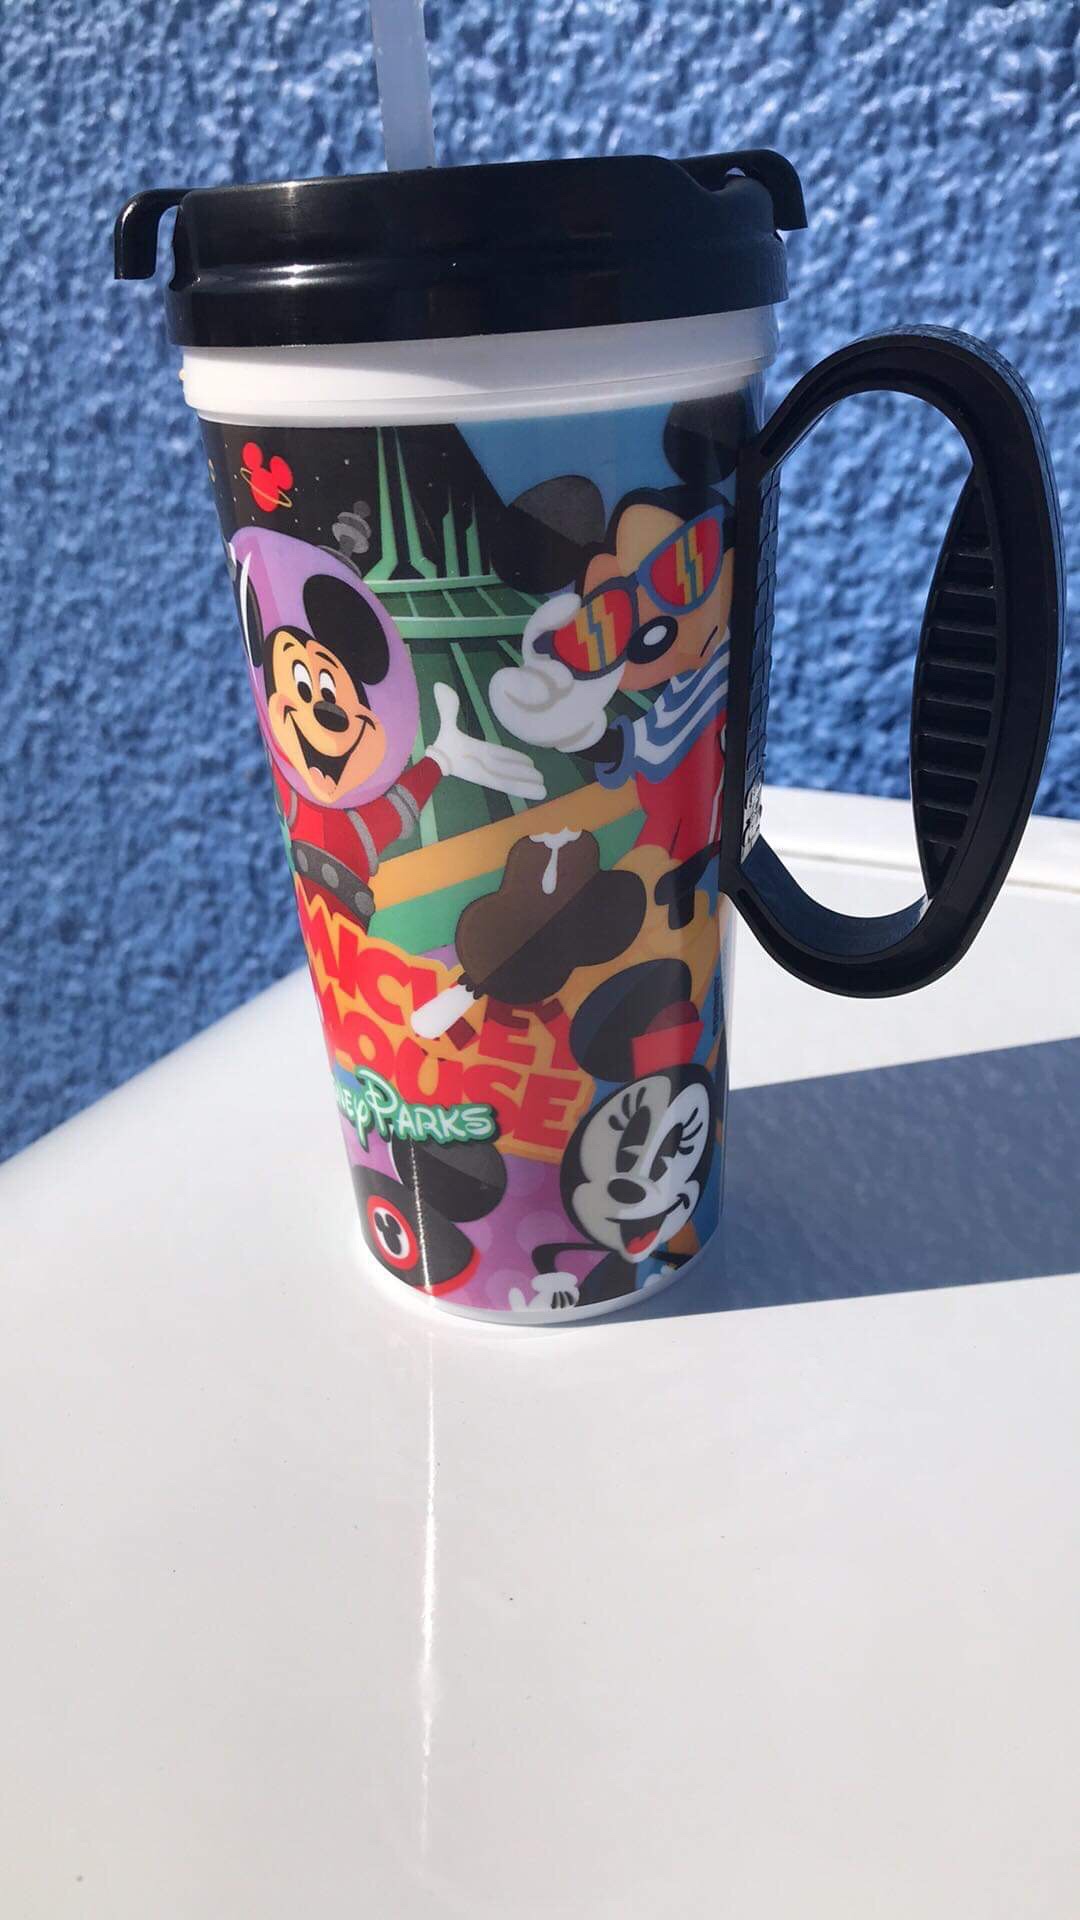 New Mickey Celebration Themed Resort Mug at All Star Movies